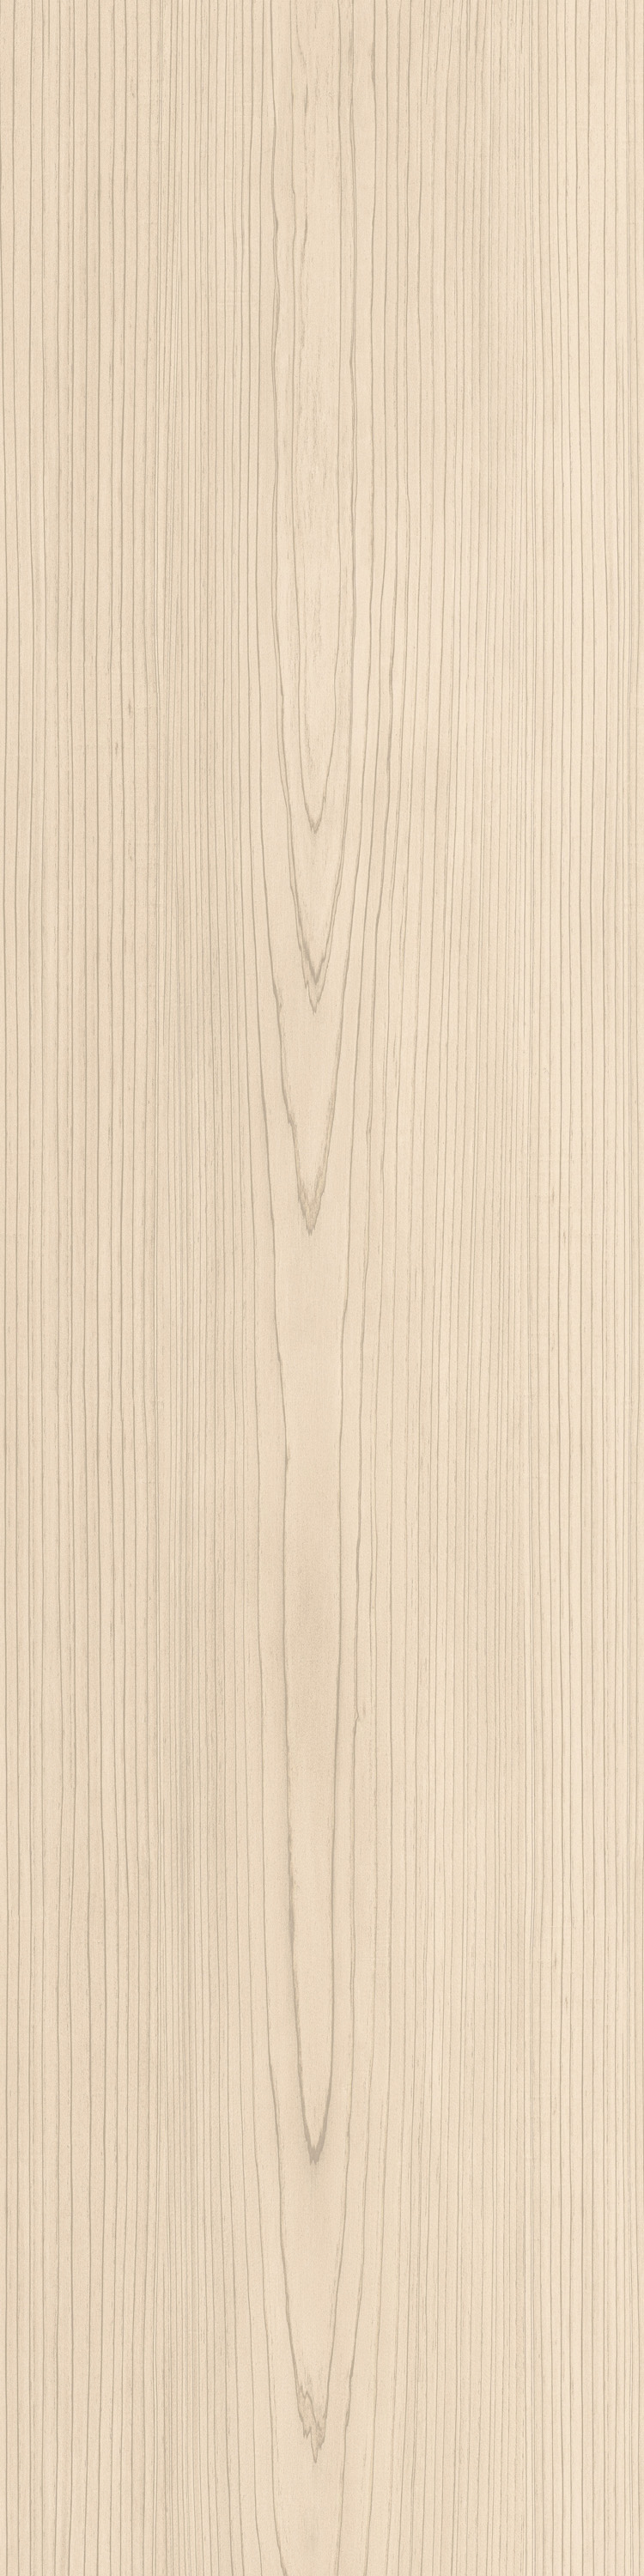 A026-04-000 Dried Oak